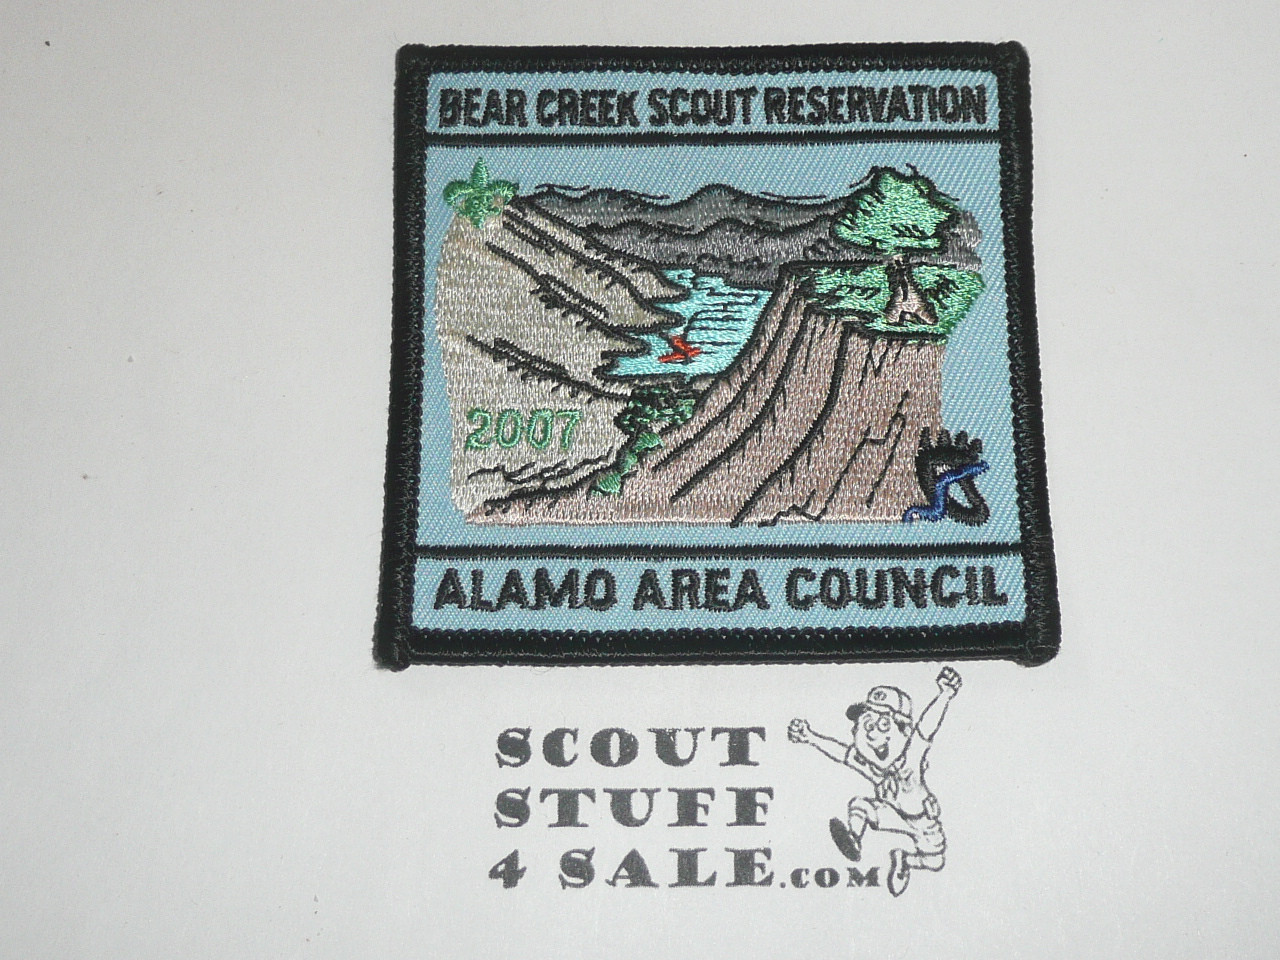 Bear Creek Scout Reservation Patch, Alamo Area Council, 2007